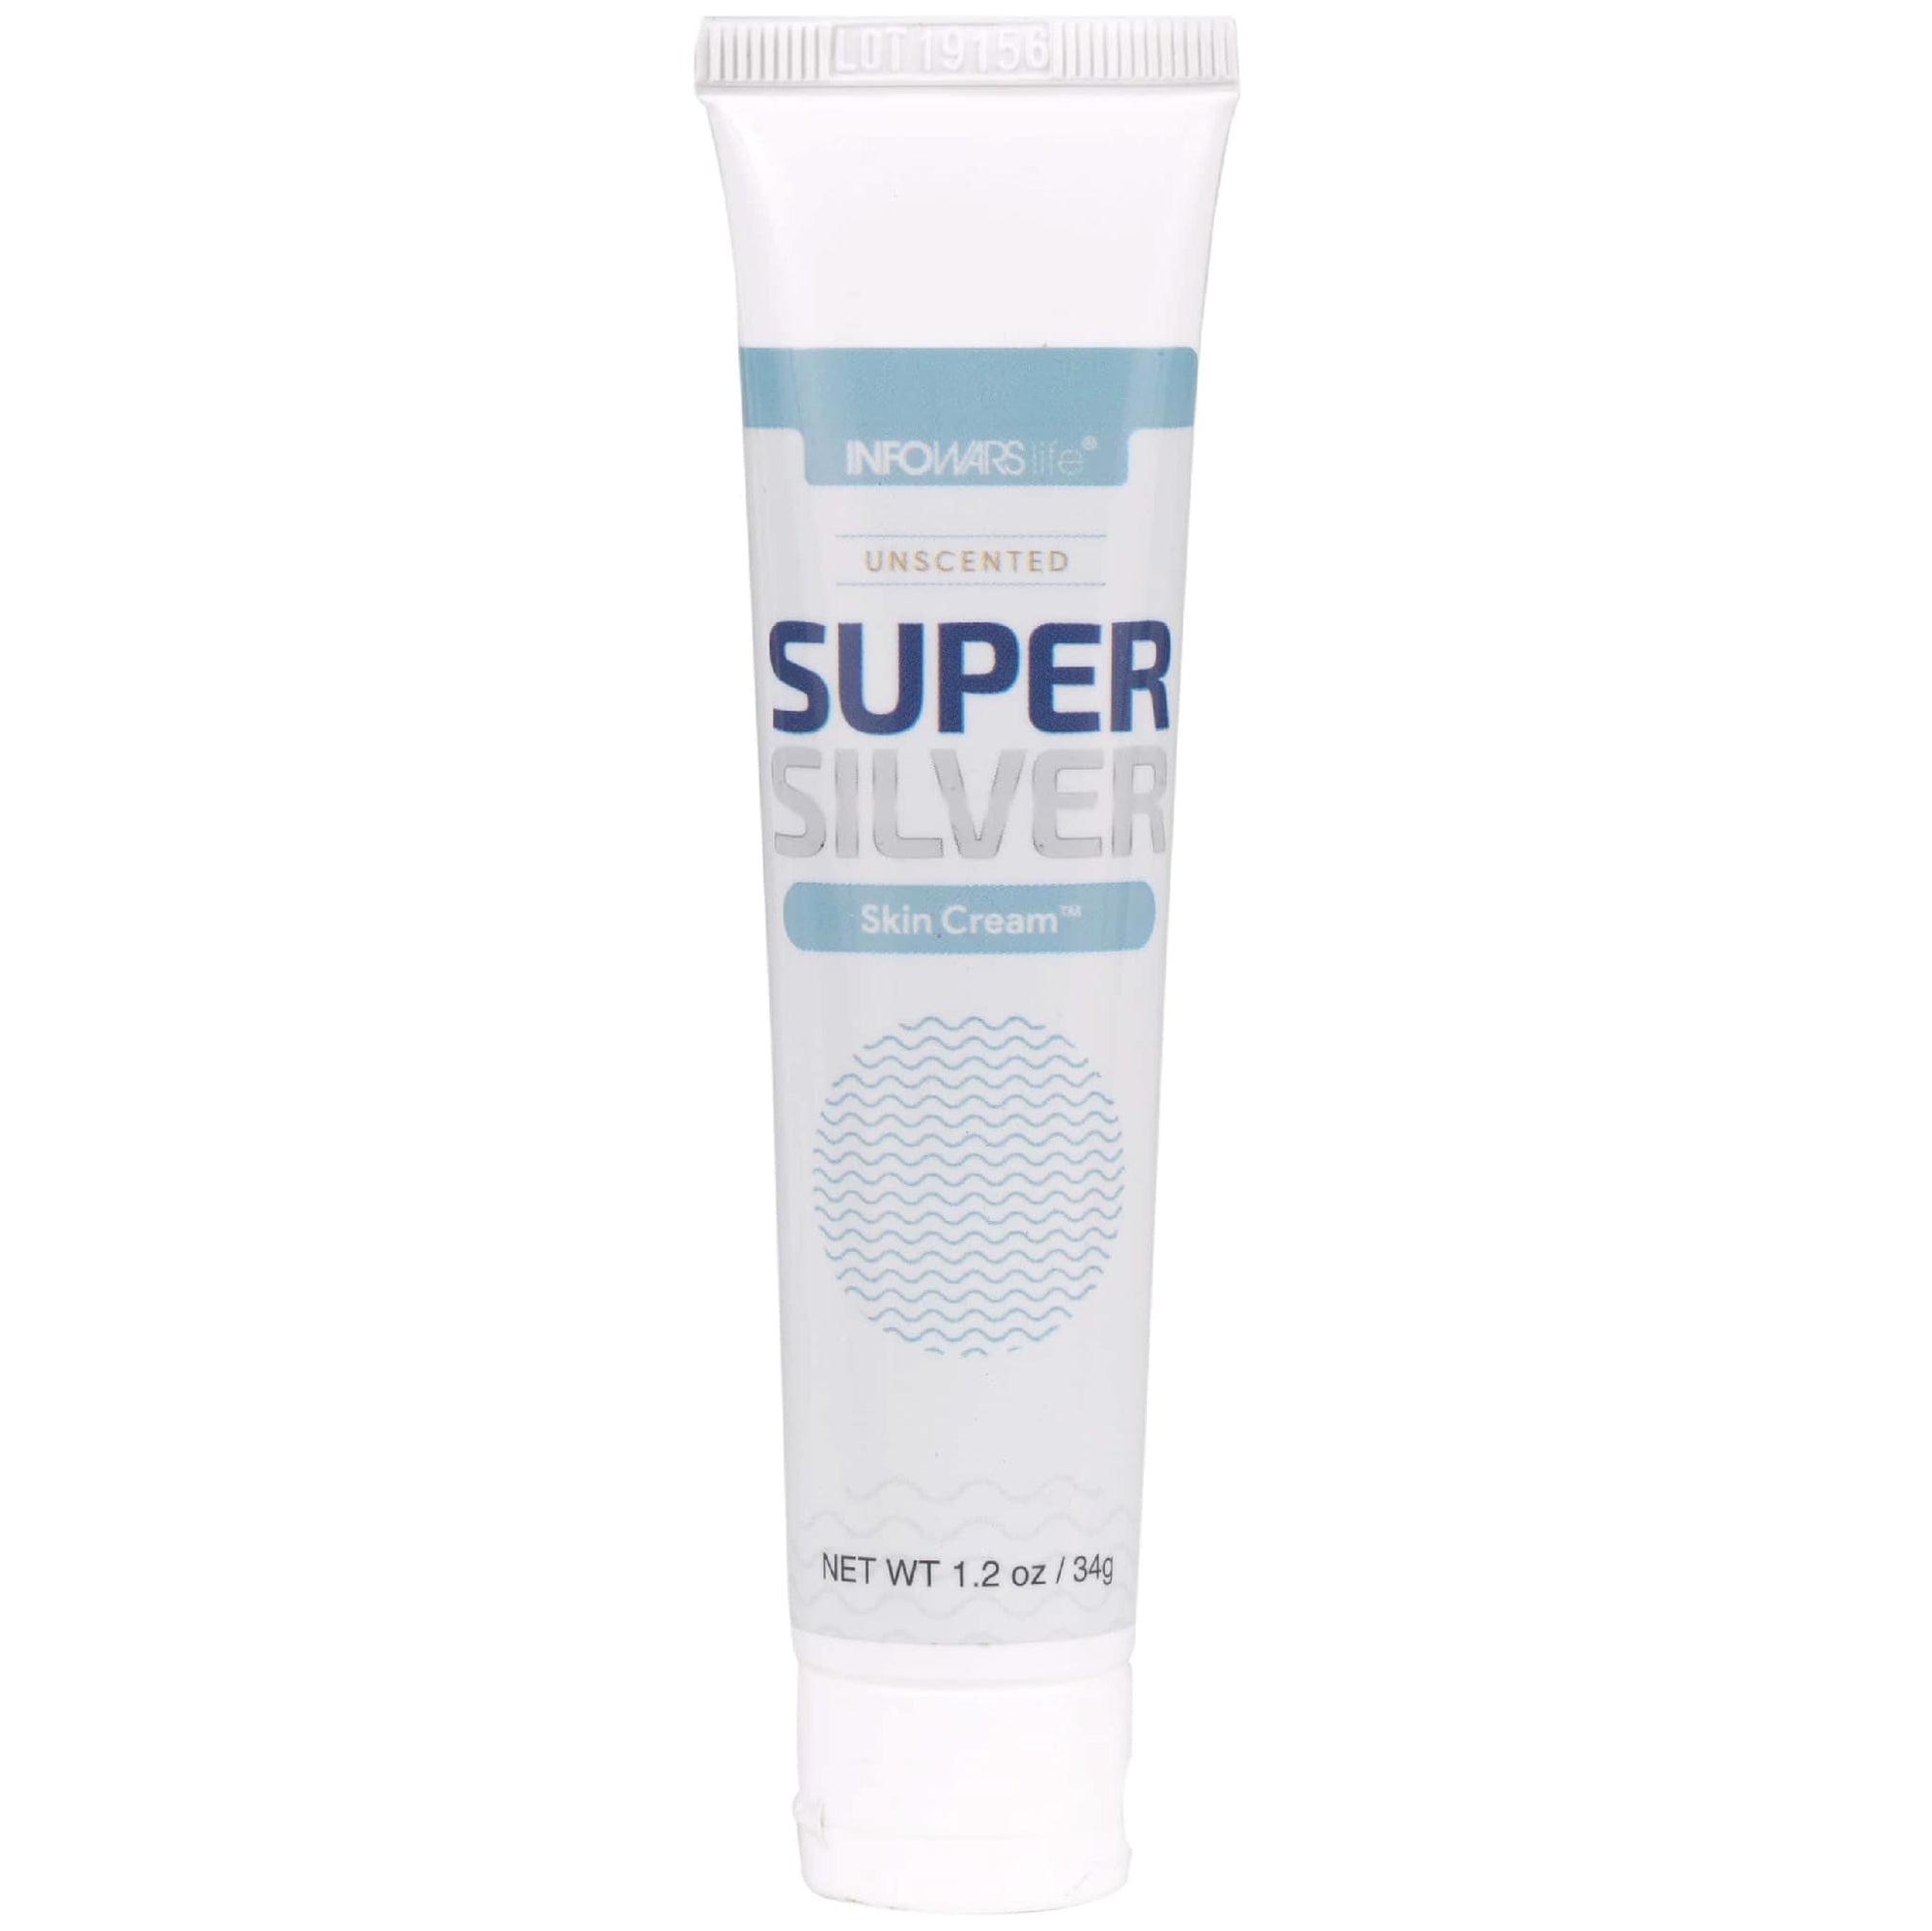  SuperSilver Unscented Skin Cream 1.2 oz Front